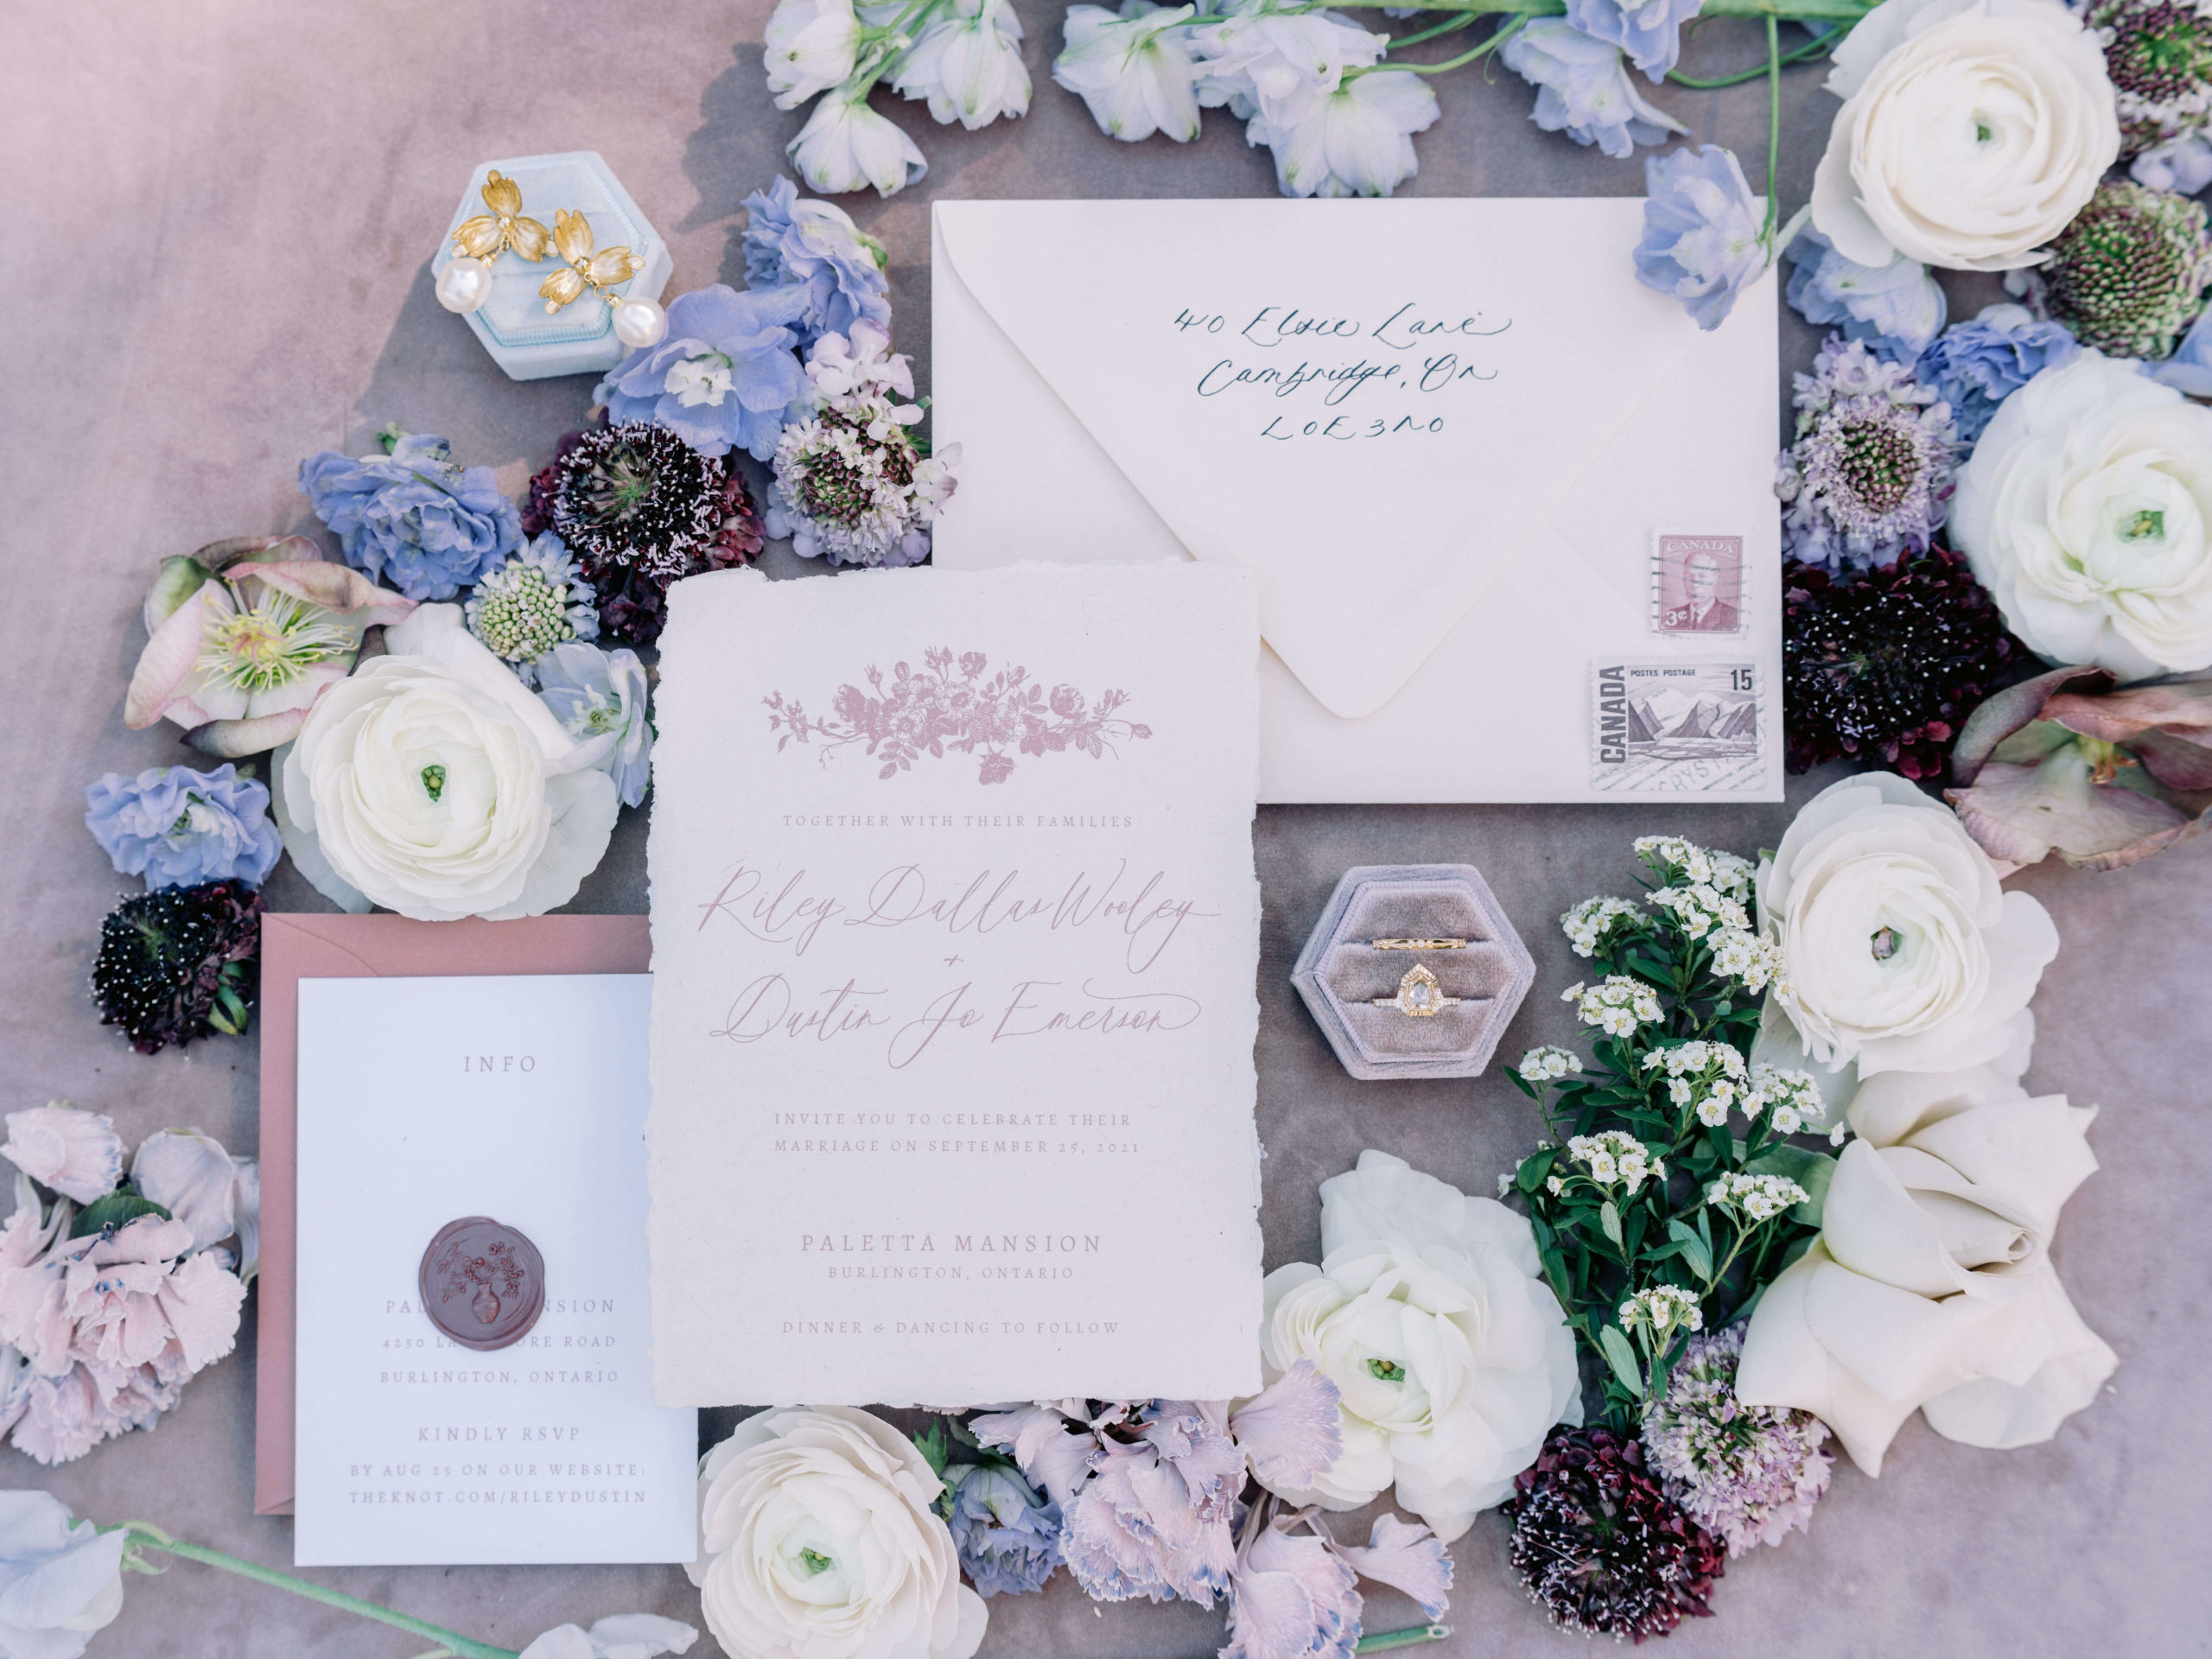 Paletta Mansion Wedding invitations